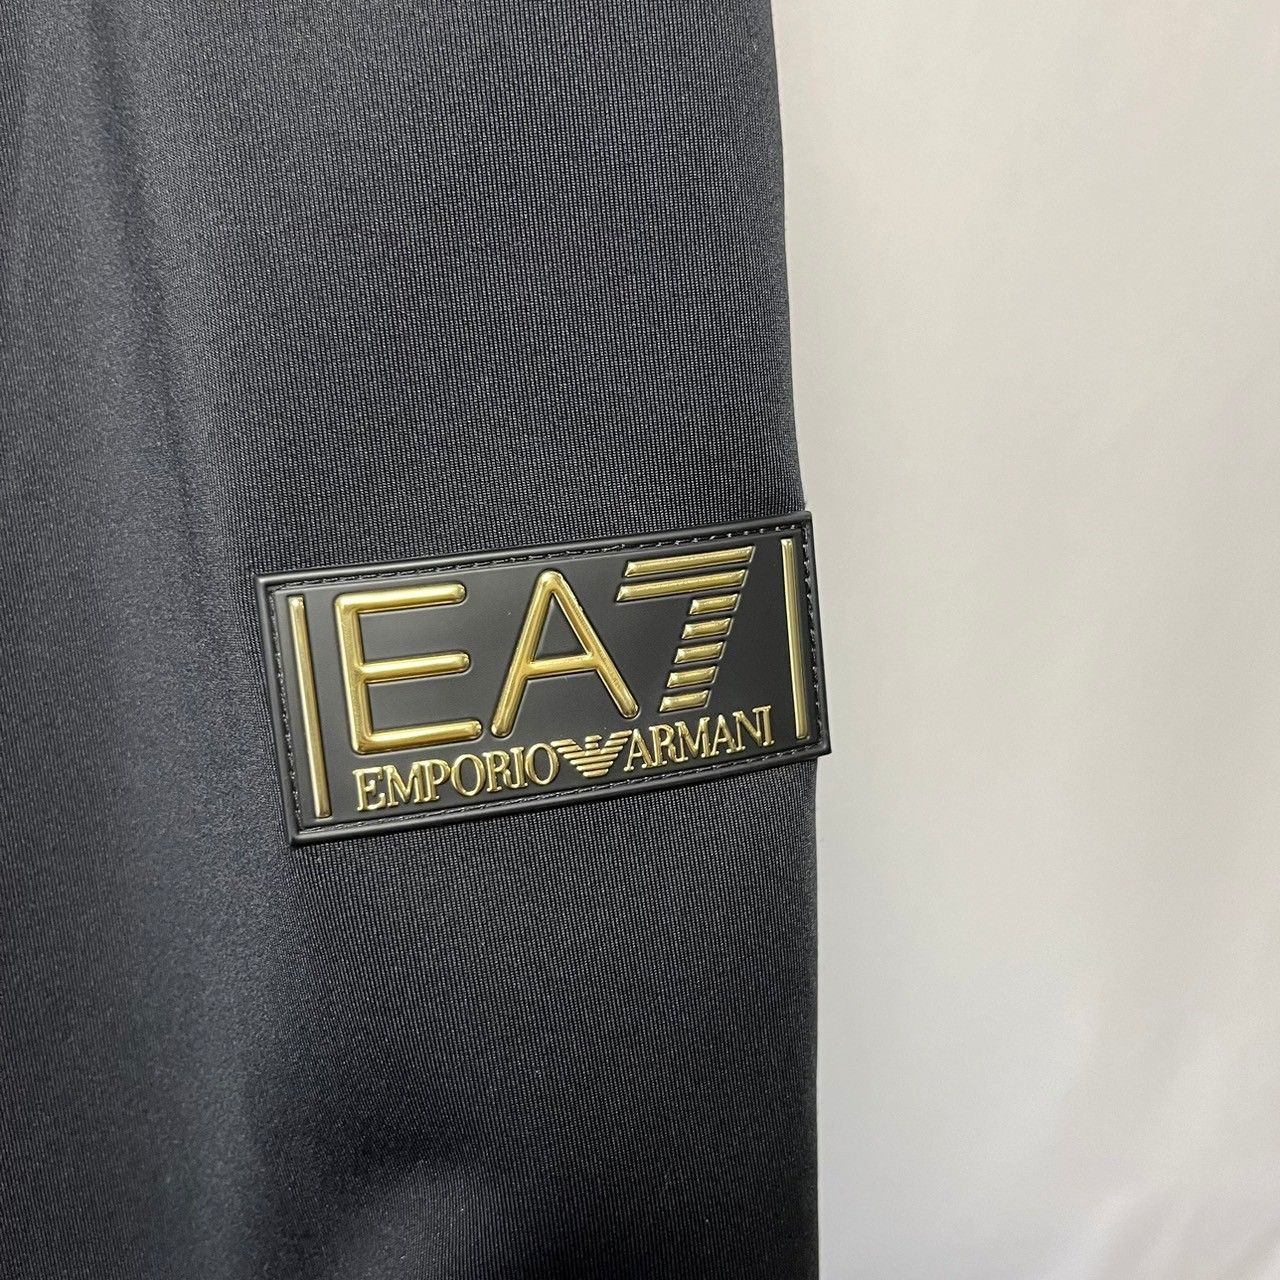 EA7 EMPORIO ARMANI Gold Label エンポリオアルマーニ ジャージーセットアップ パーカー ロングパンツ 6RPP67 PJRZZ 6RPM36 PJRZZ